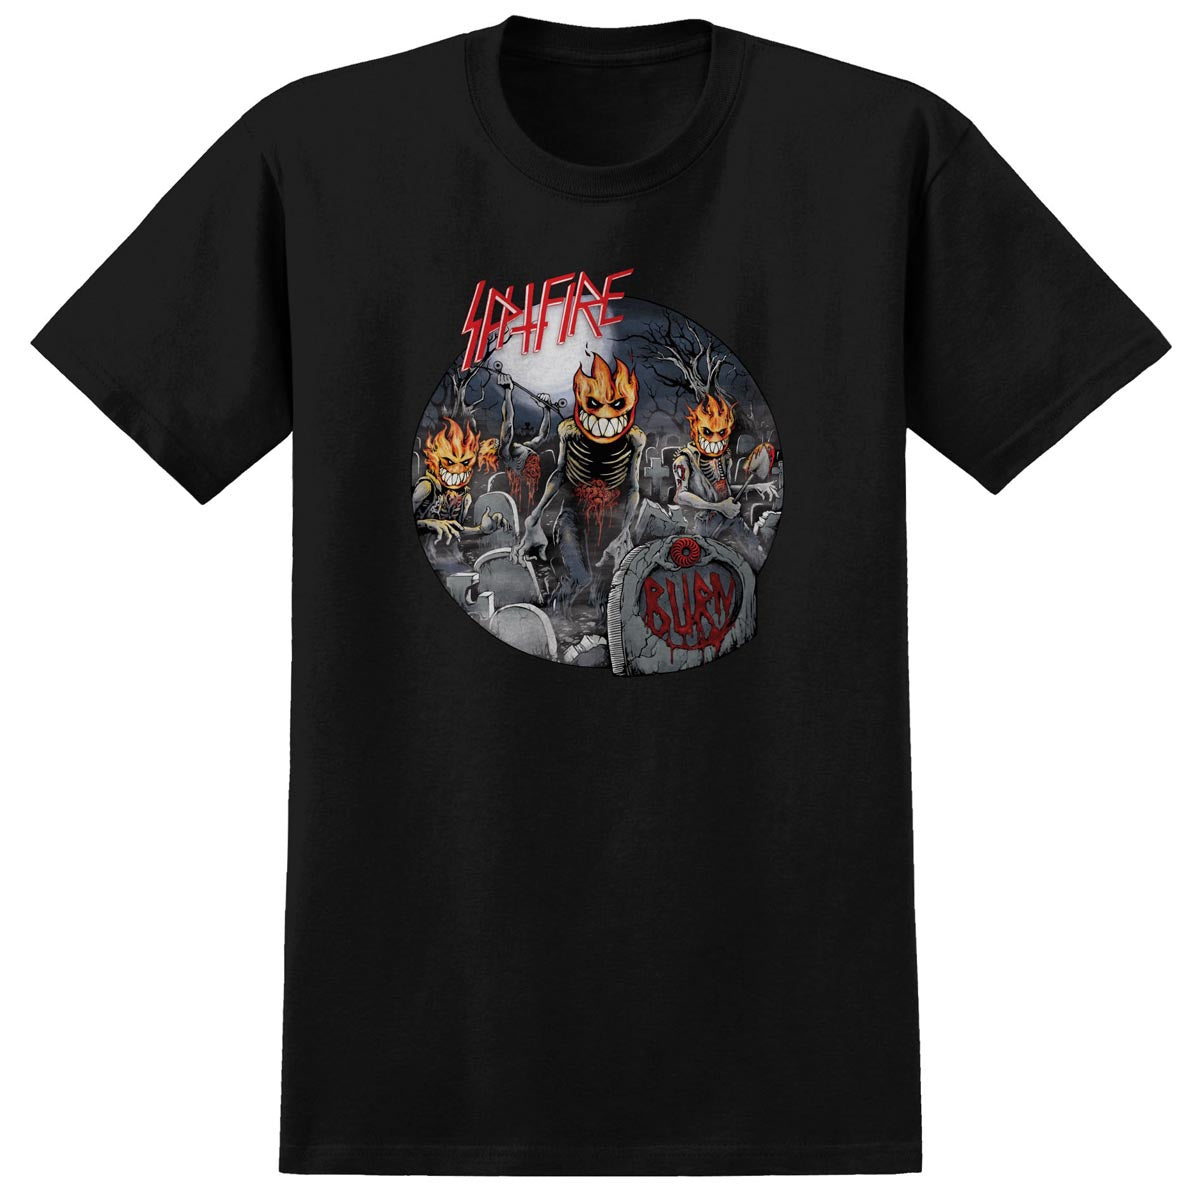 Spitfire Undead T-Shirt - Black image 1